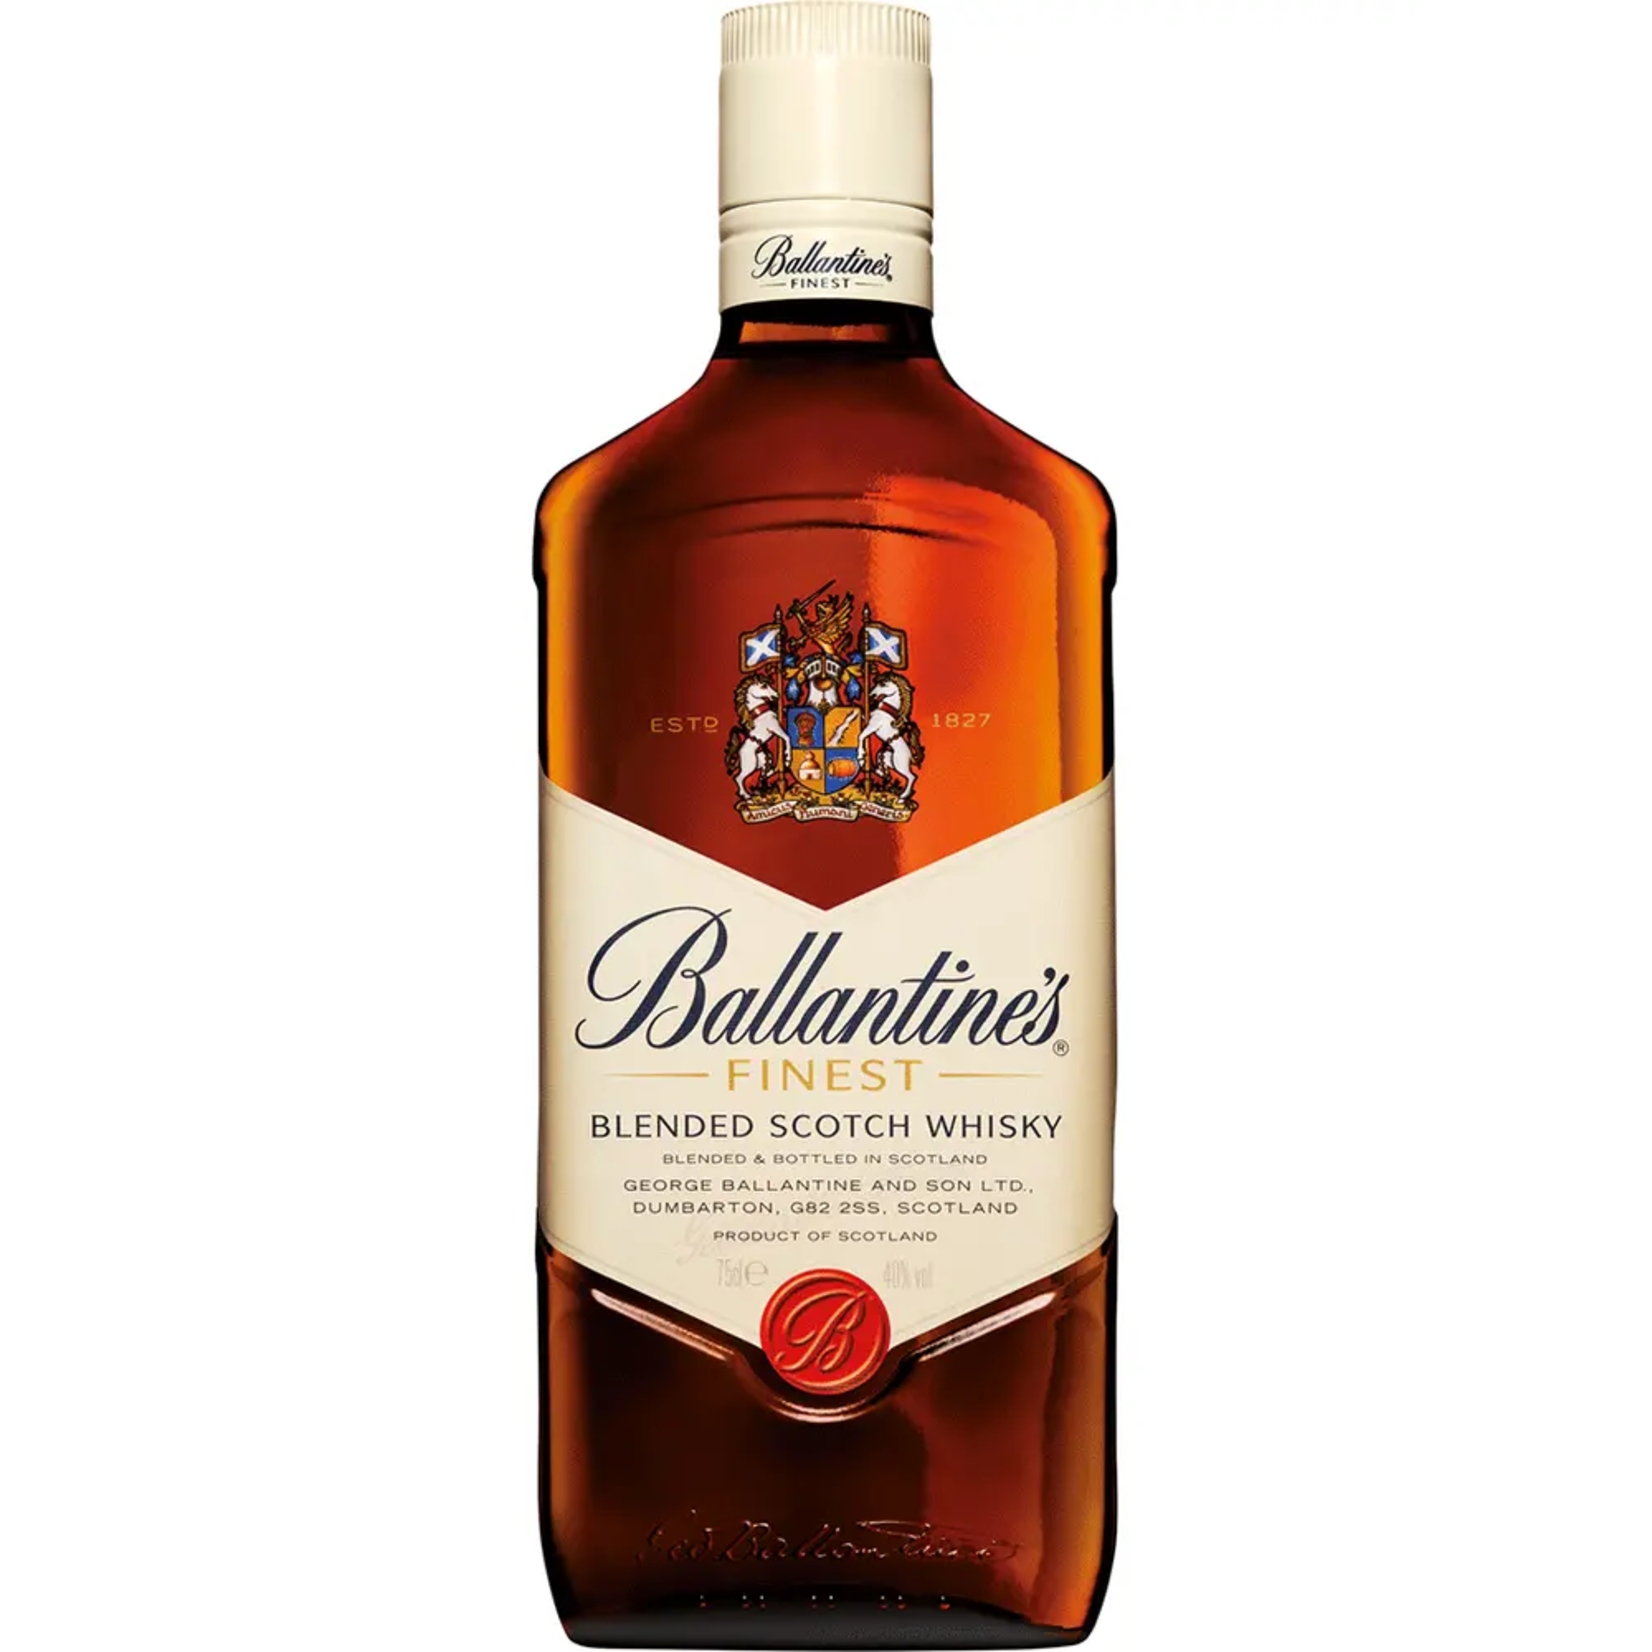 Ballantines Finest Scotch Whisky 80Proof  750ml